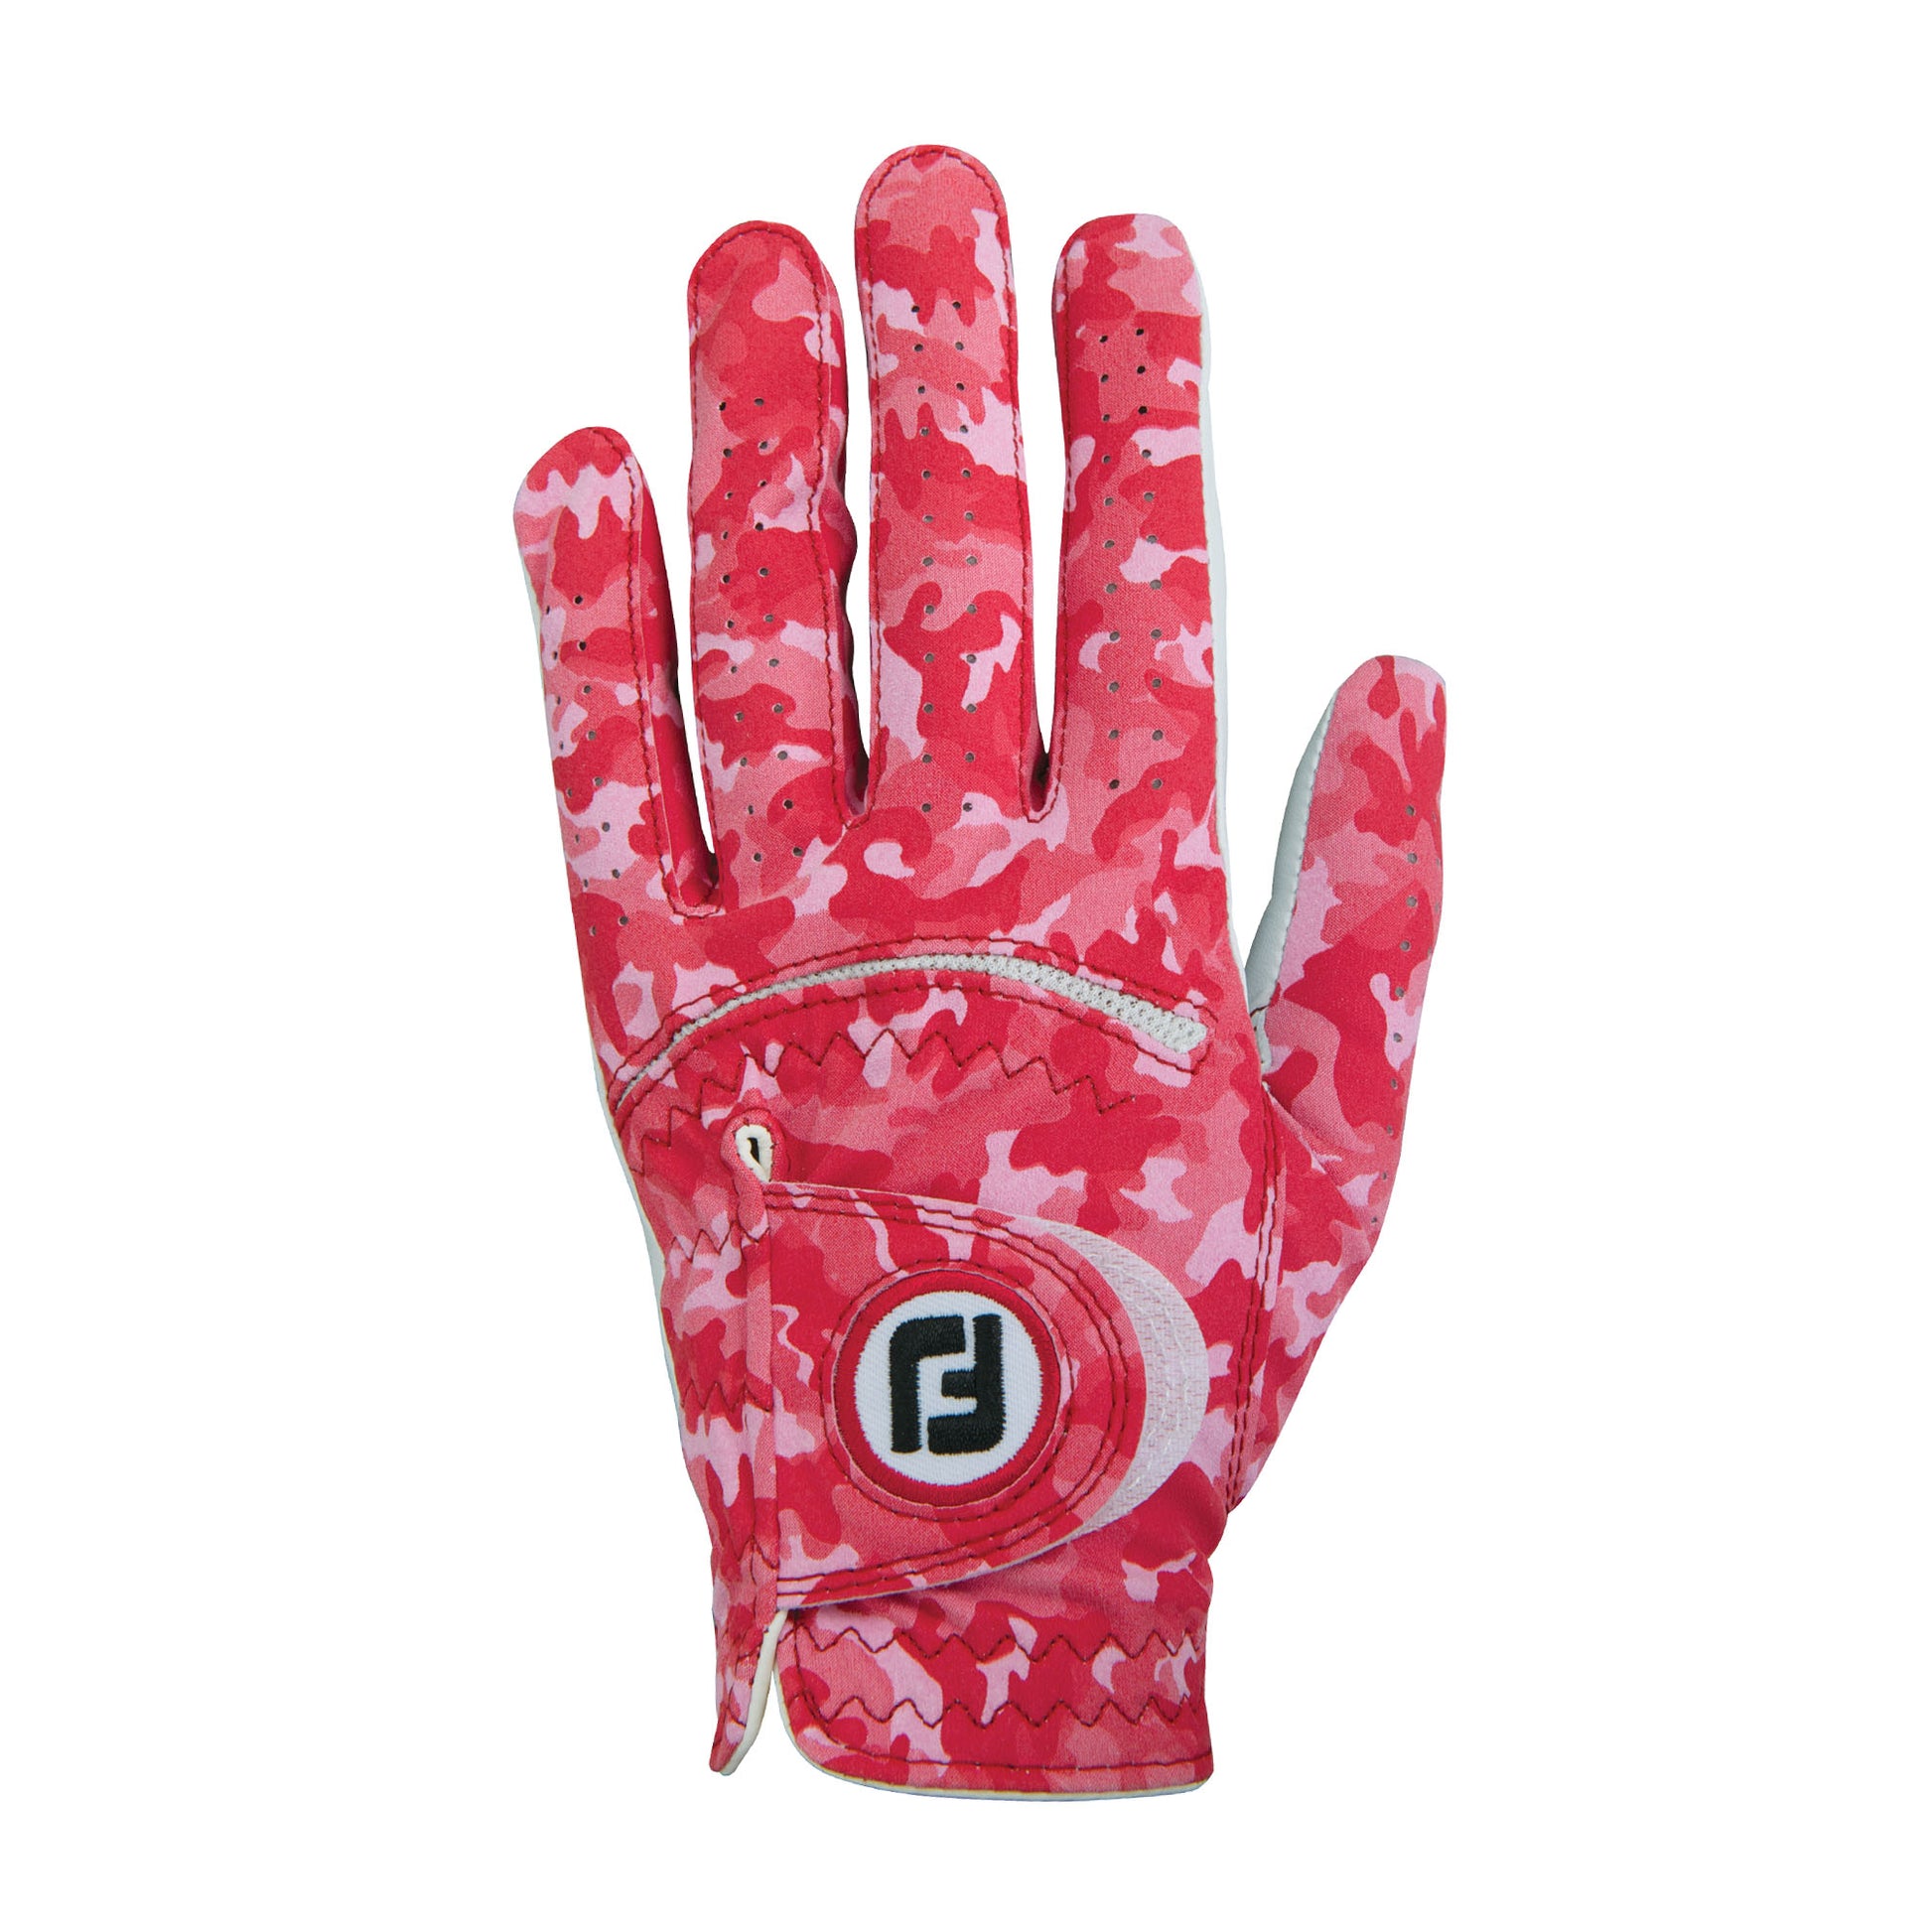 FootJoy Ladies Spectrum Golf Glove in Red Camo